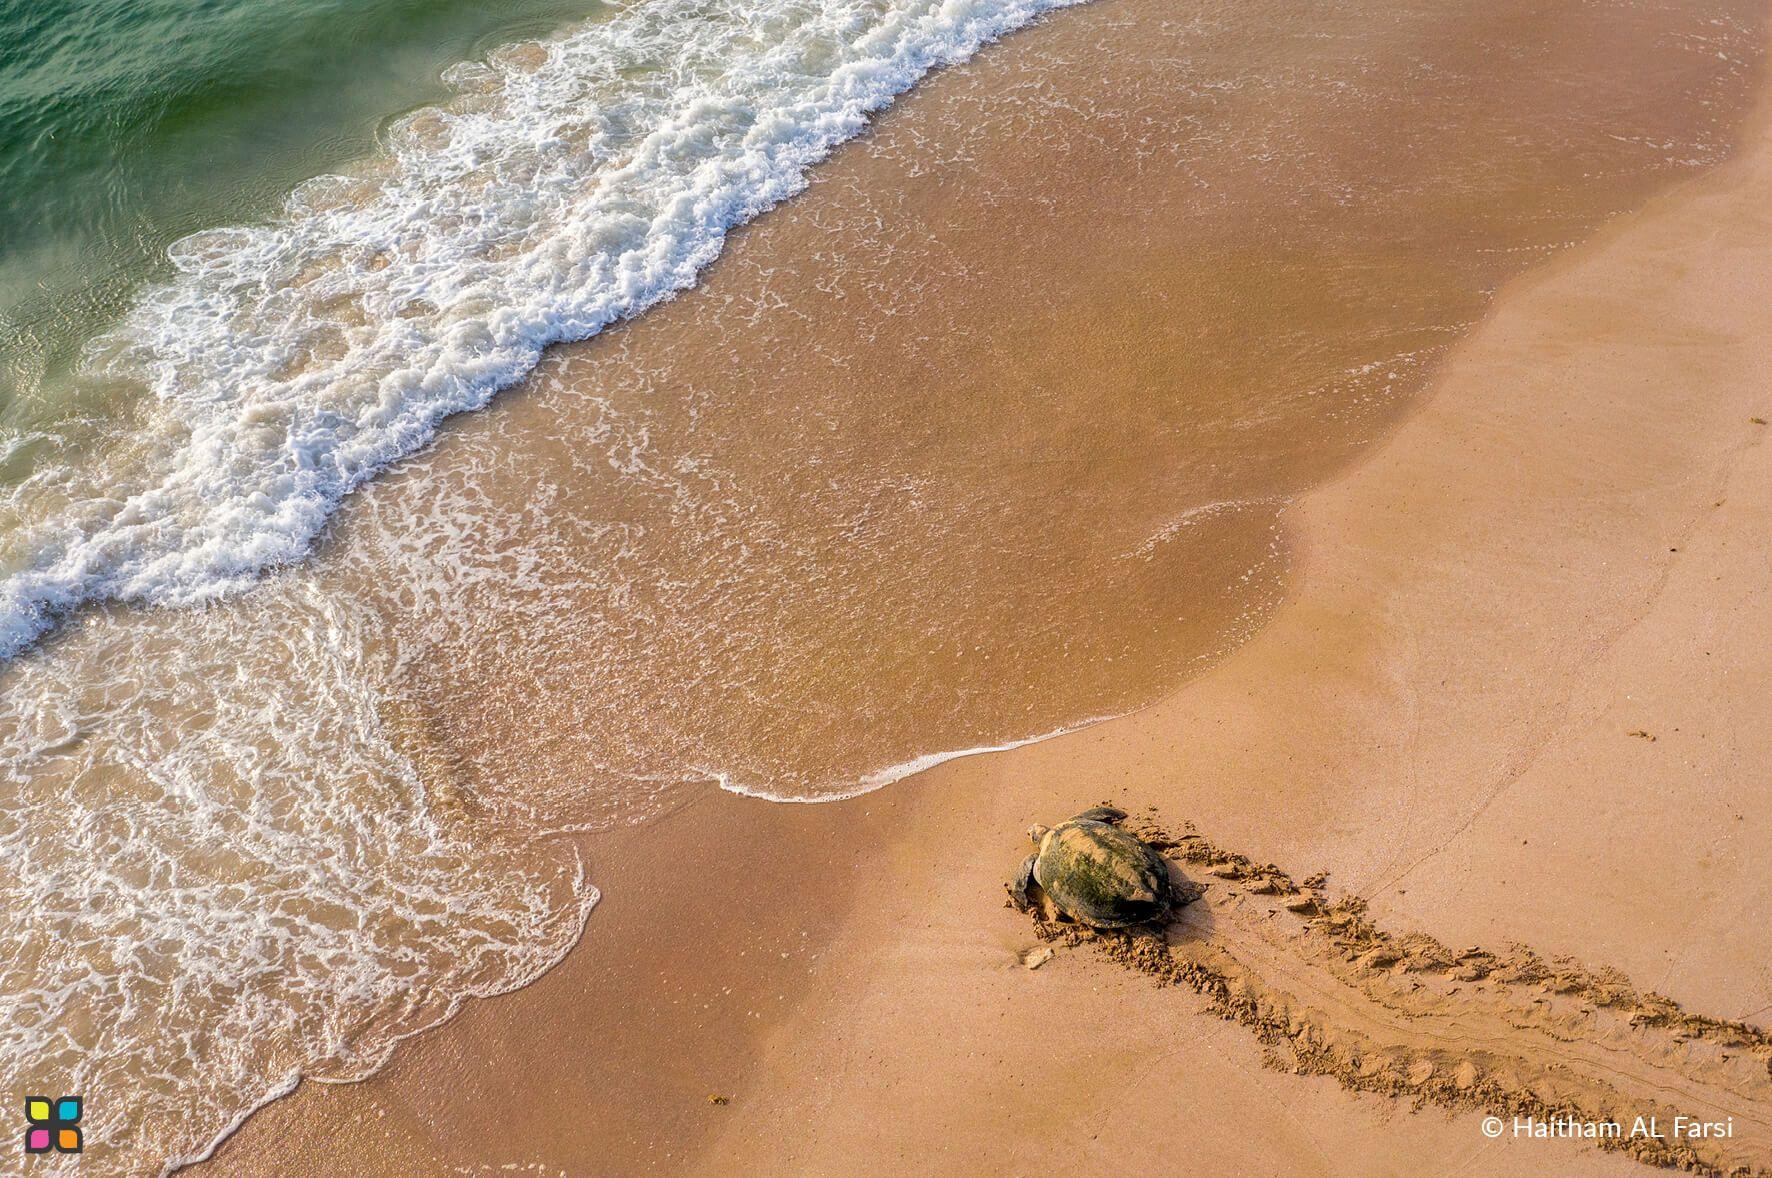 An intrepid sea turtle hatchling treks across the sands to enter the waves.
Photographer: Haitham Al Farsi   Location: Ras Al Hadd, Oman